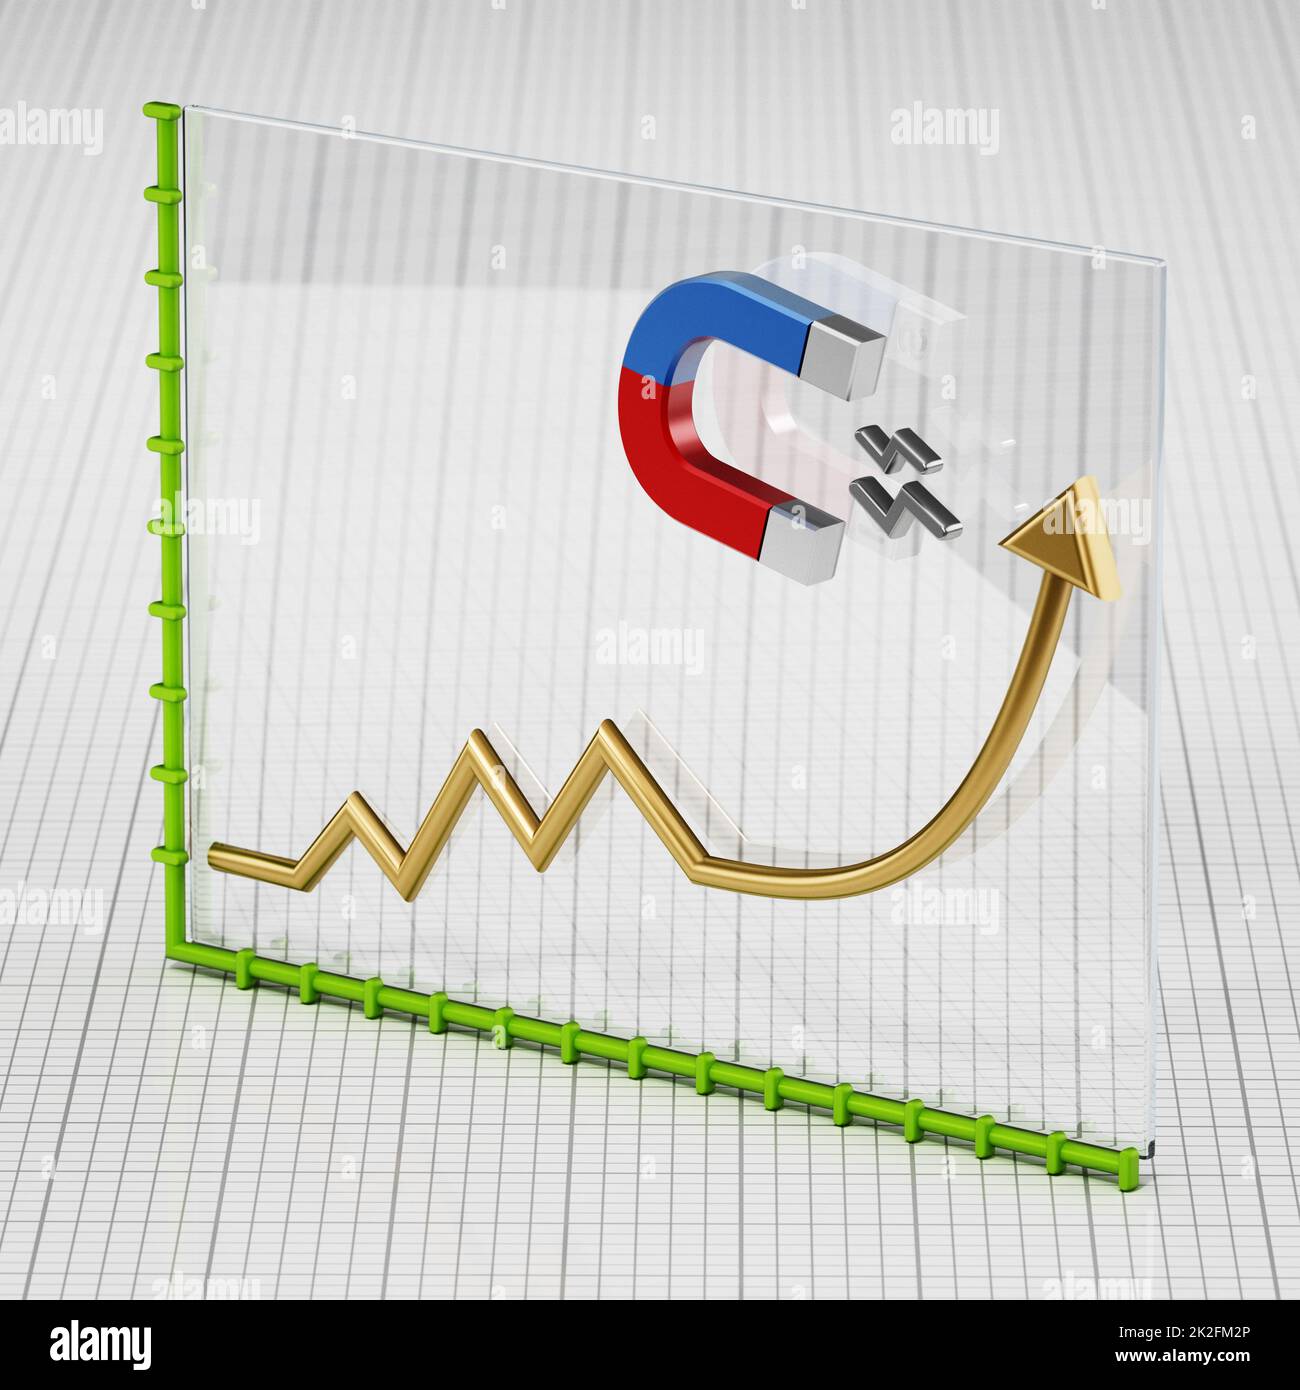 Horseshoe magnet pulling arrow symbol upwards on a business chart. 3D illustration Stock Photo